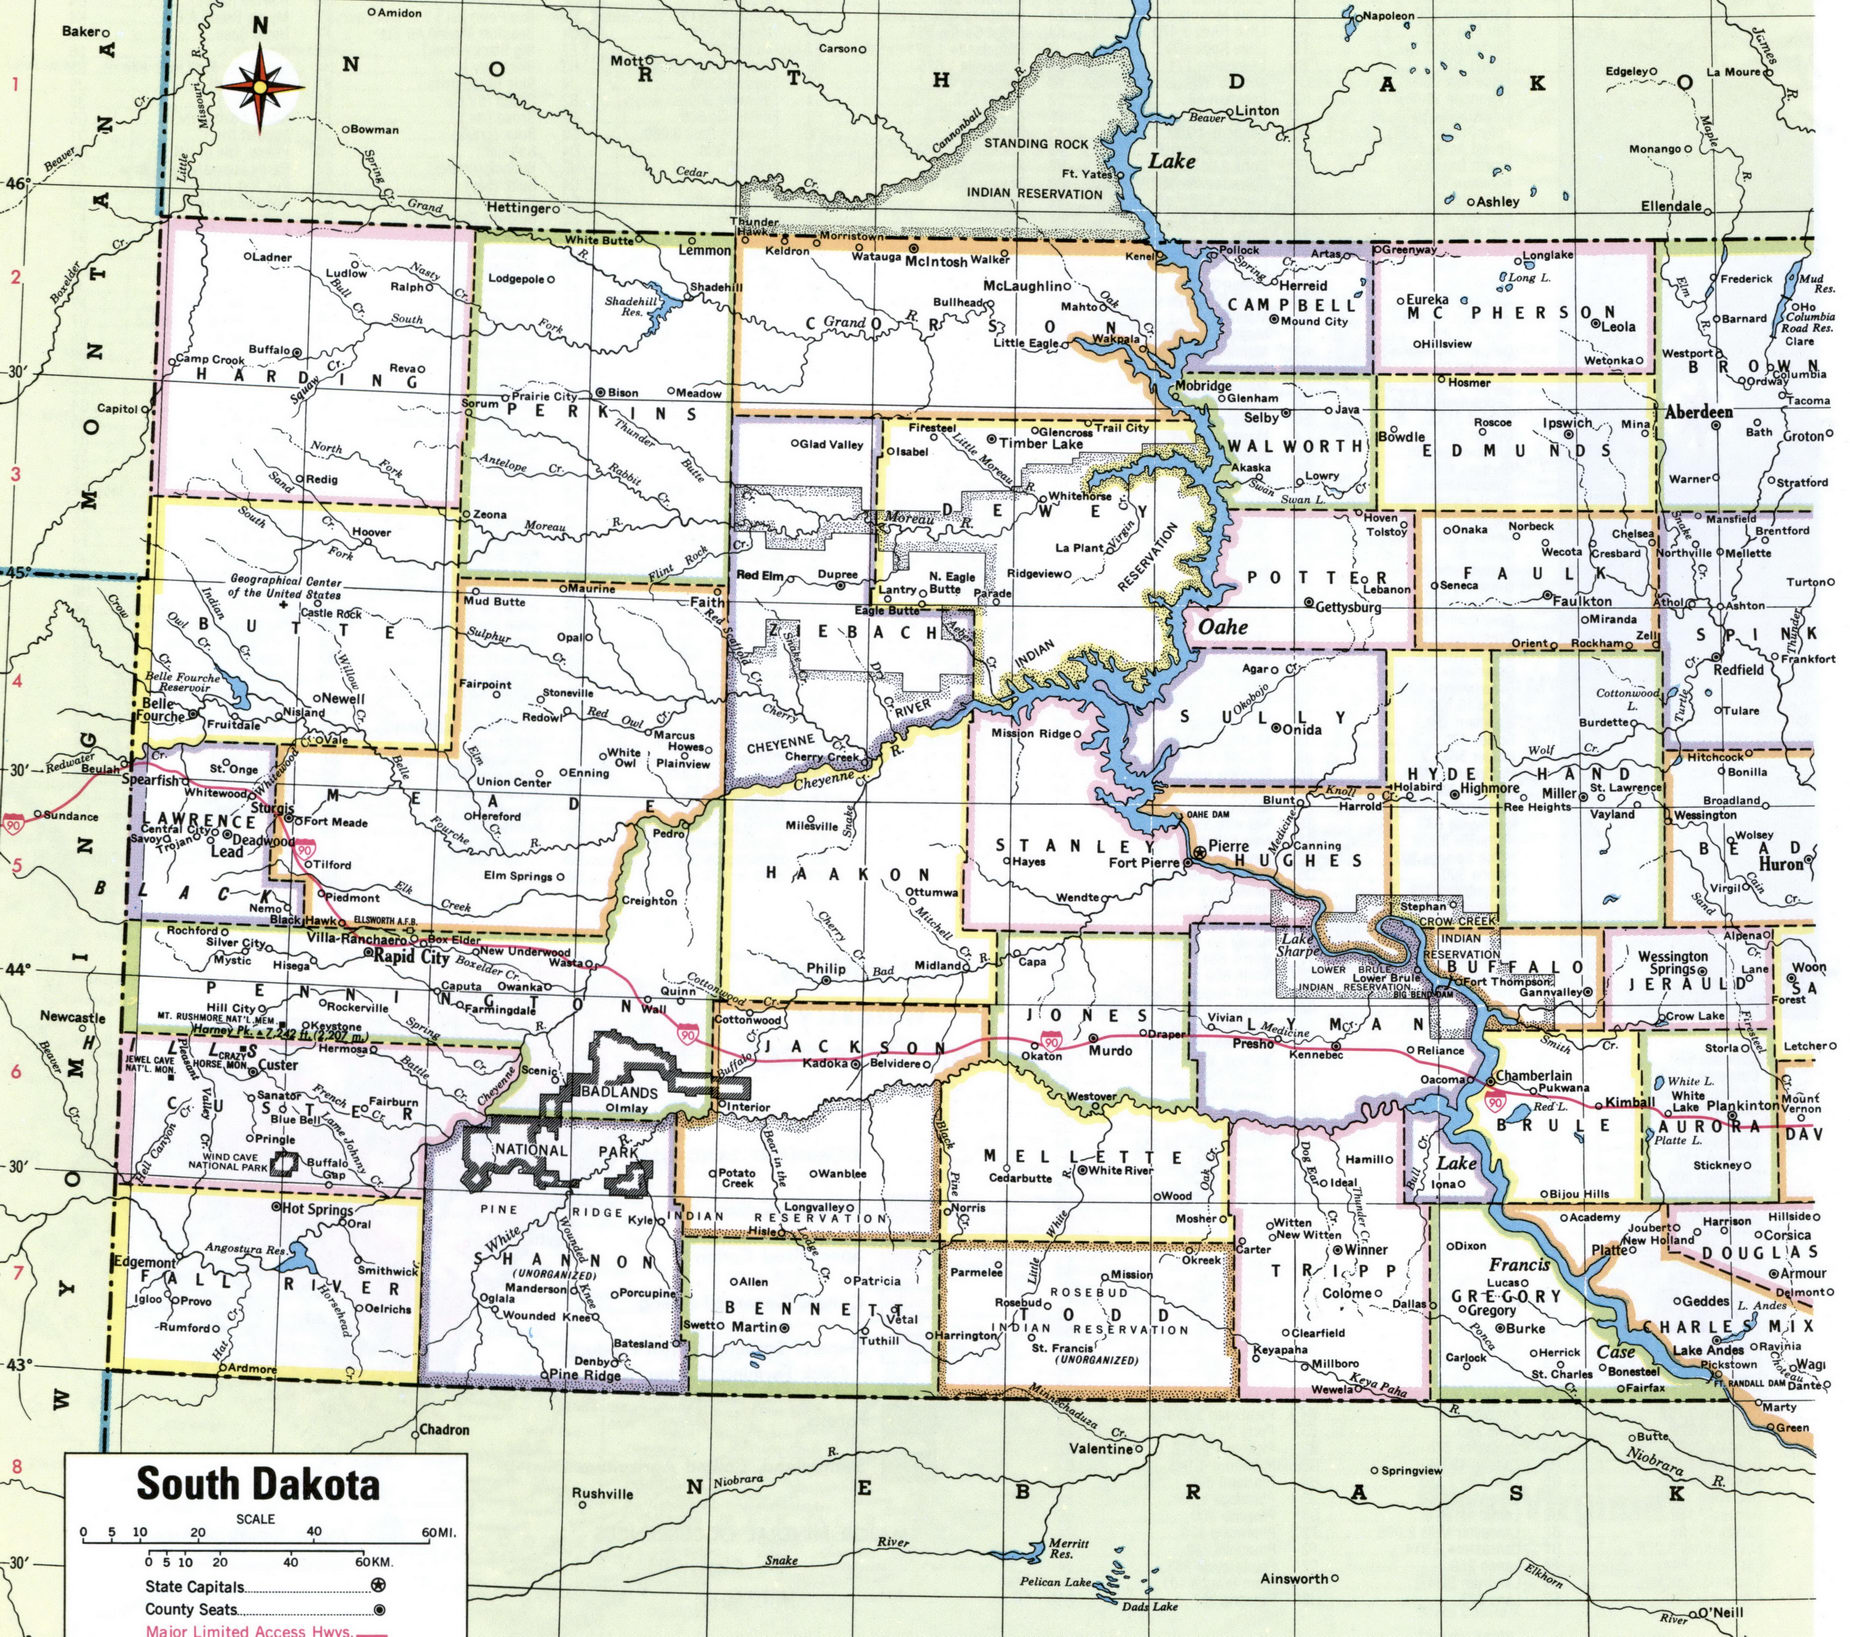 Map of South Dakota by county